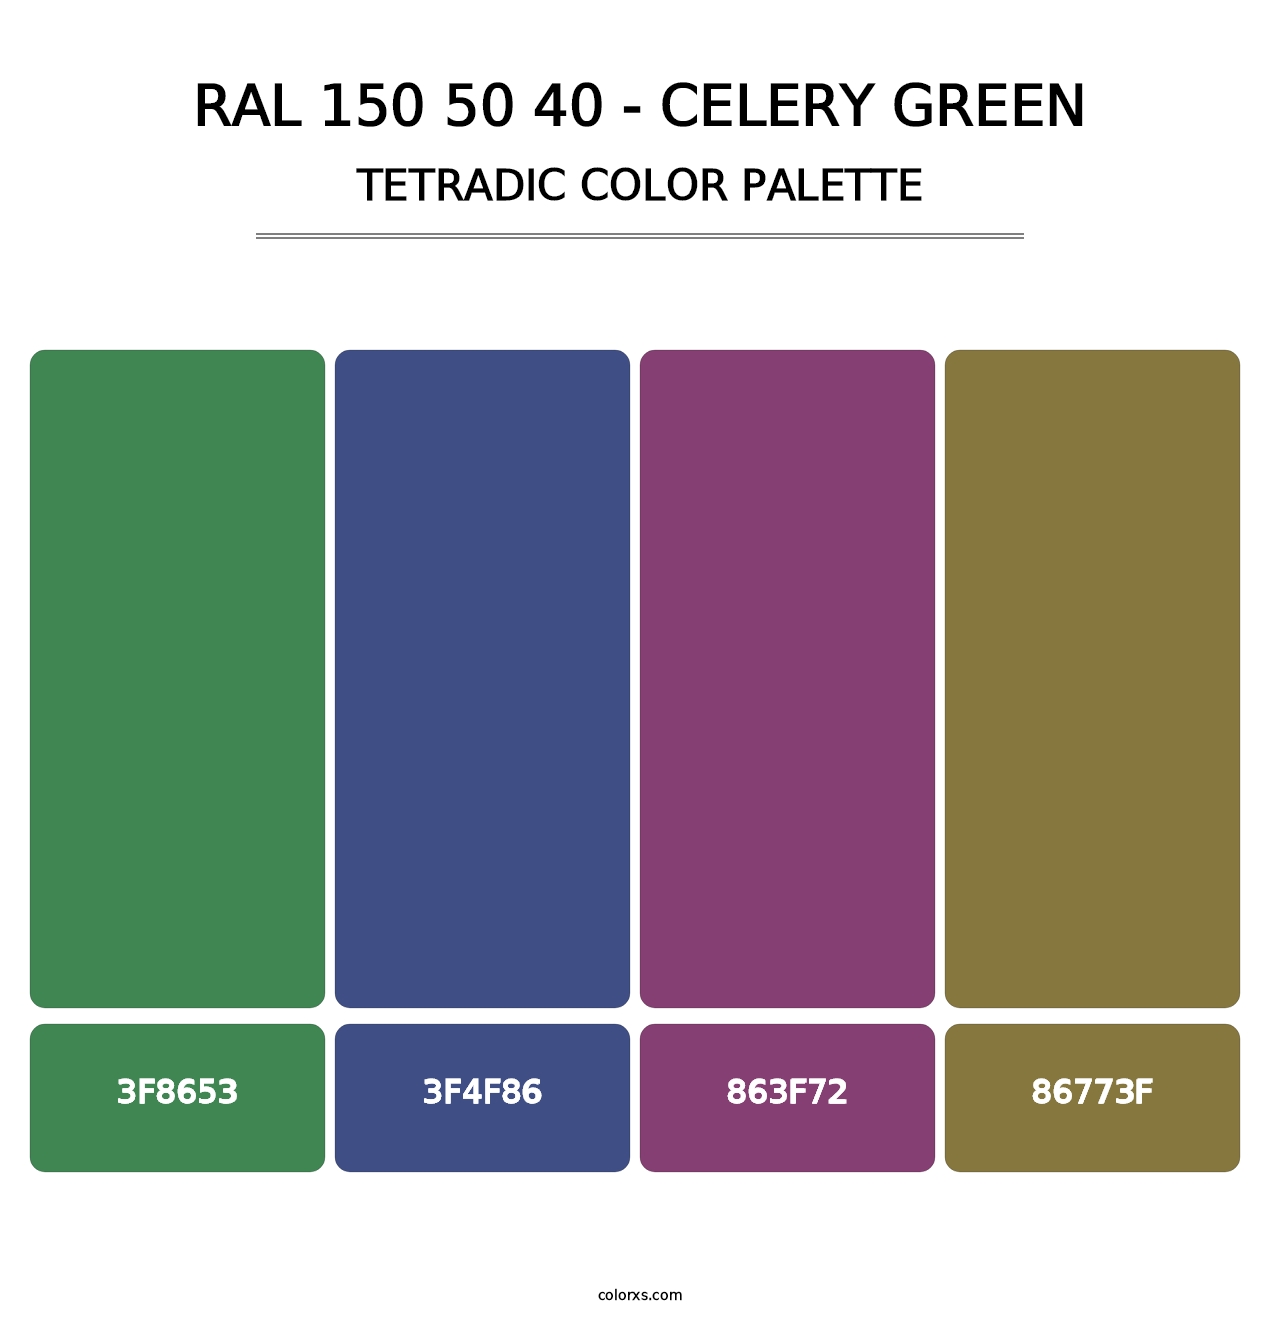 RAL 150 50 40 - Celery Green - Tetradic Color Palette